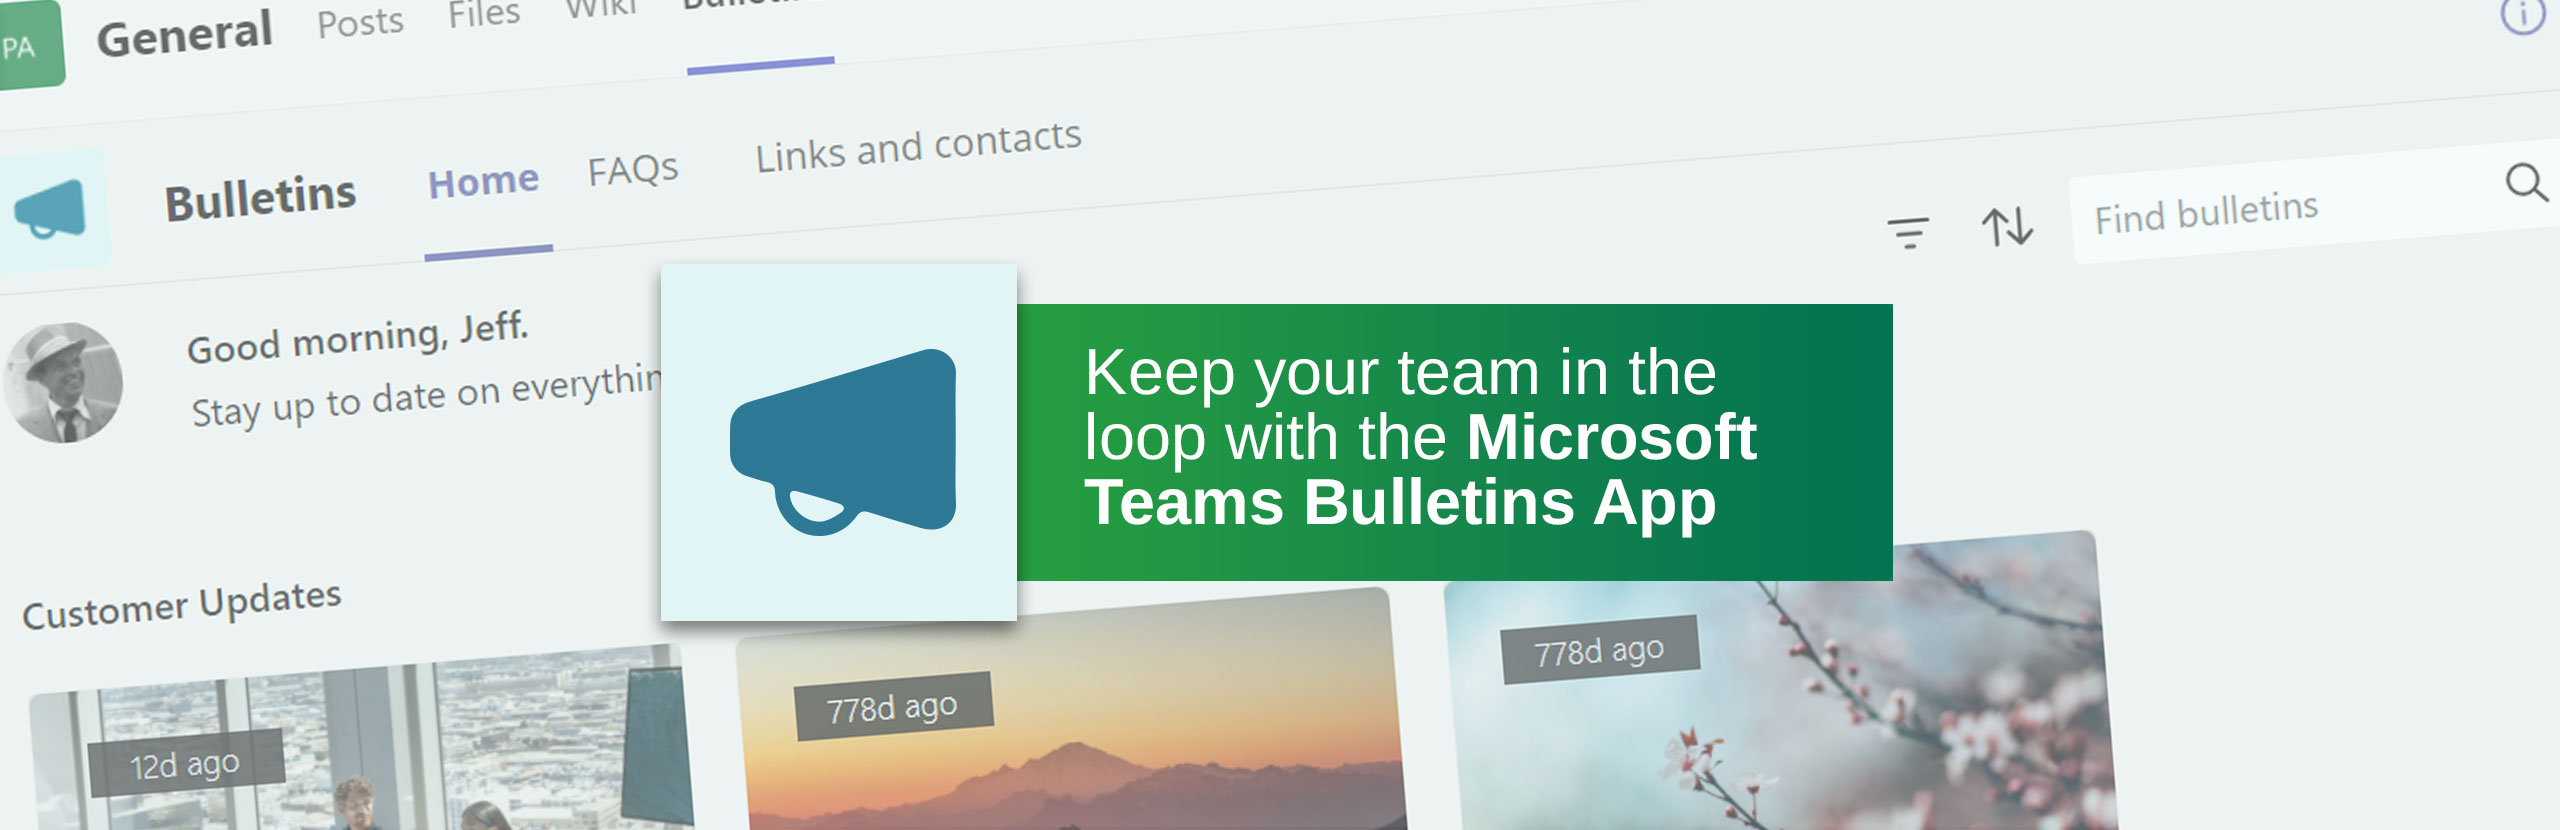 Microsoft Teams Bulletin App